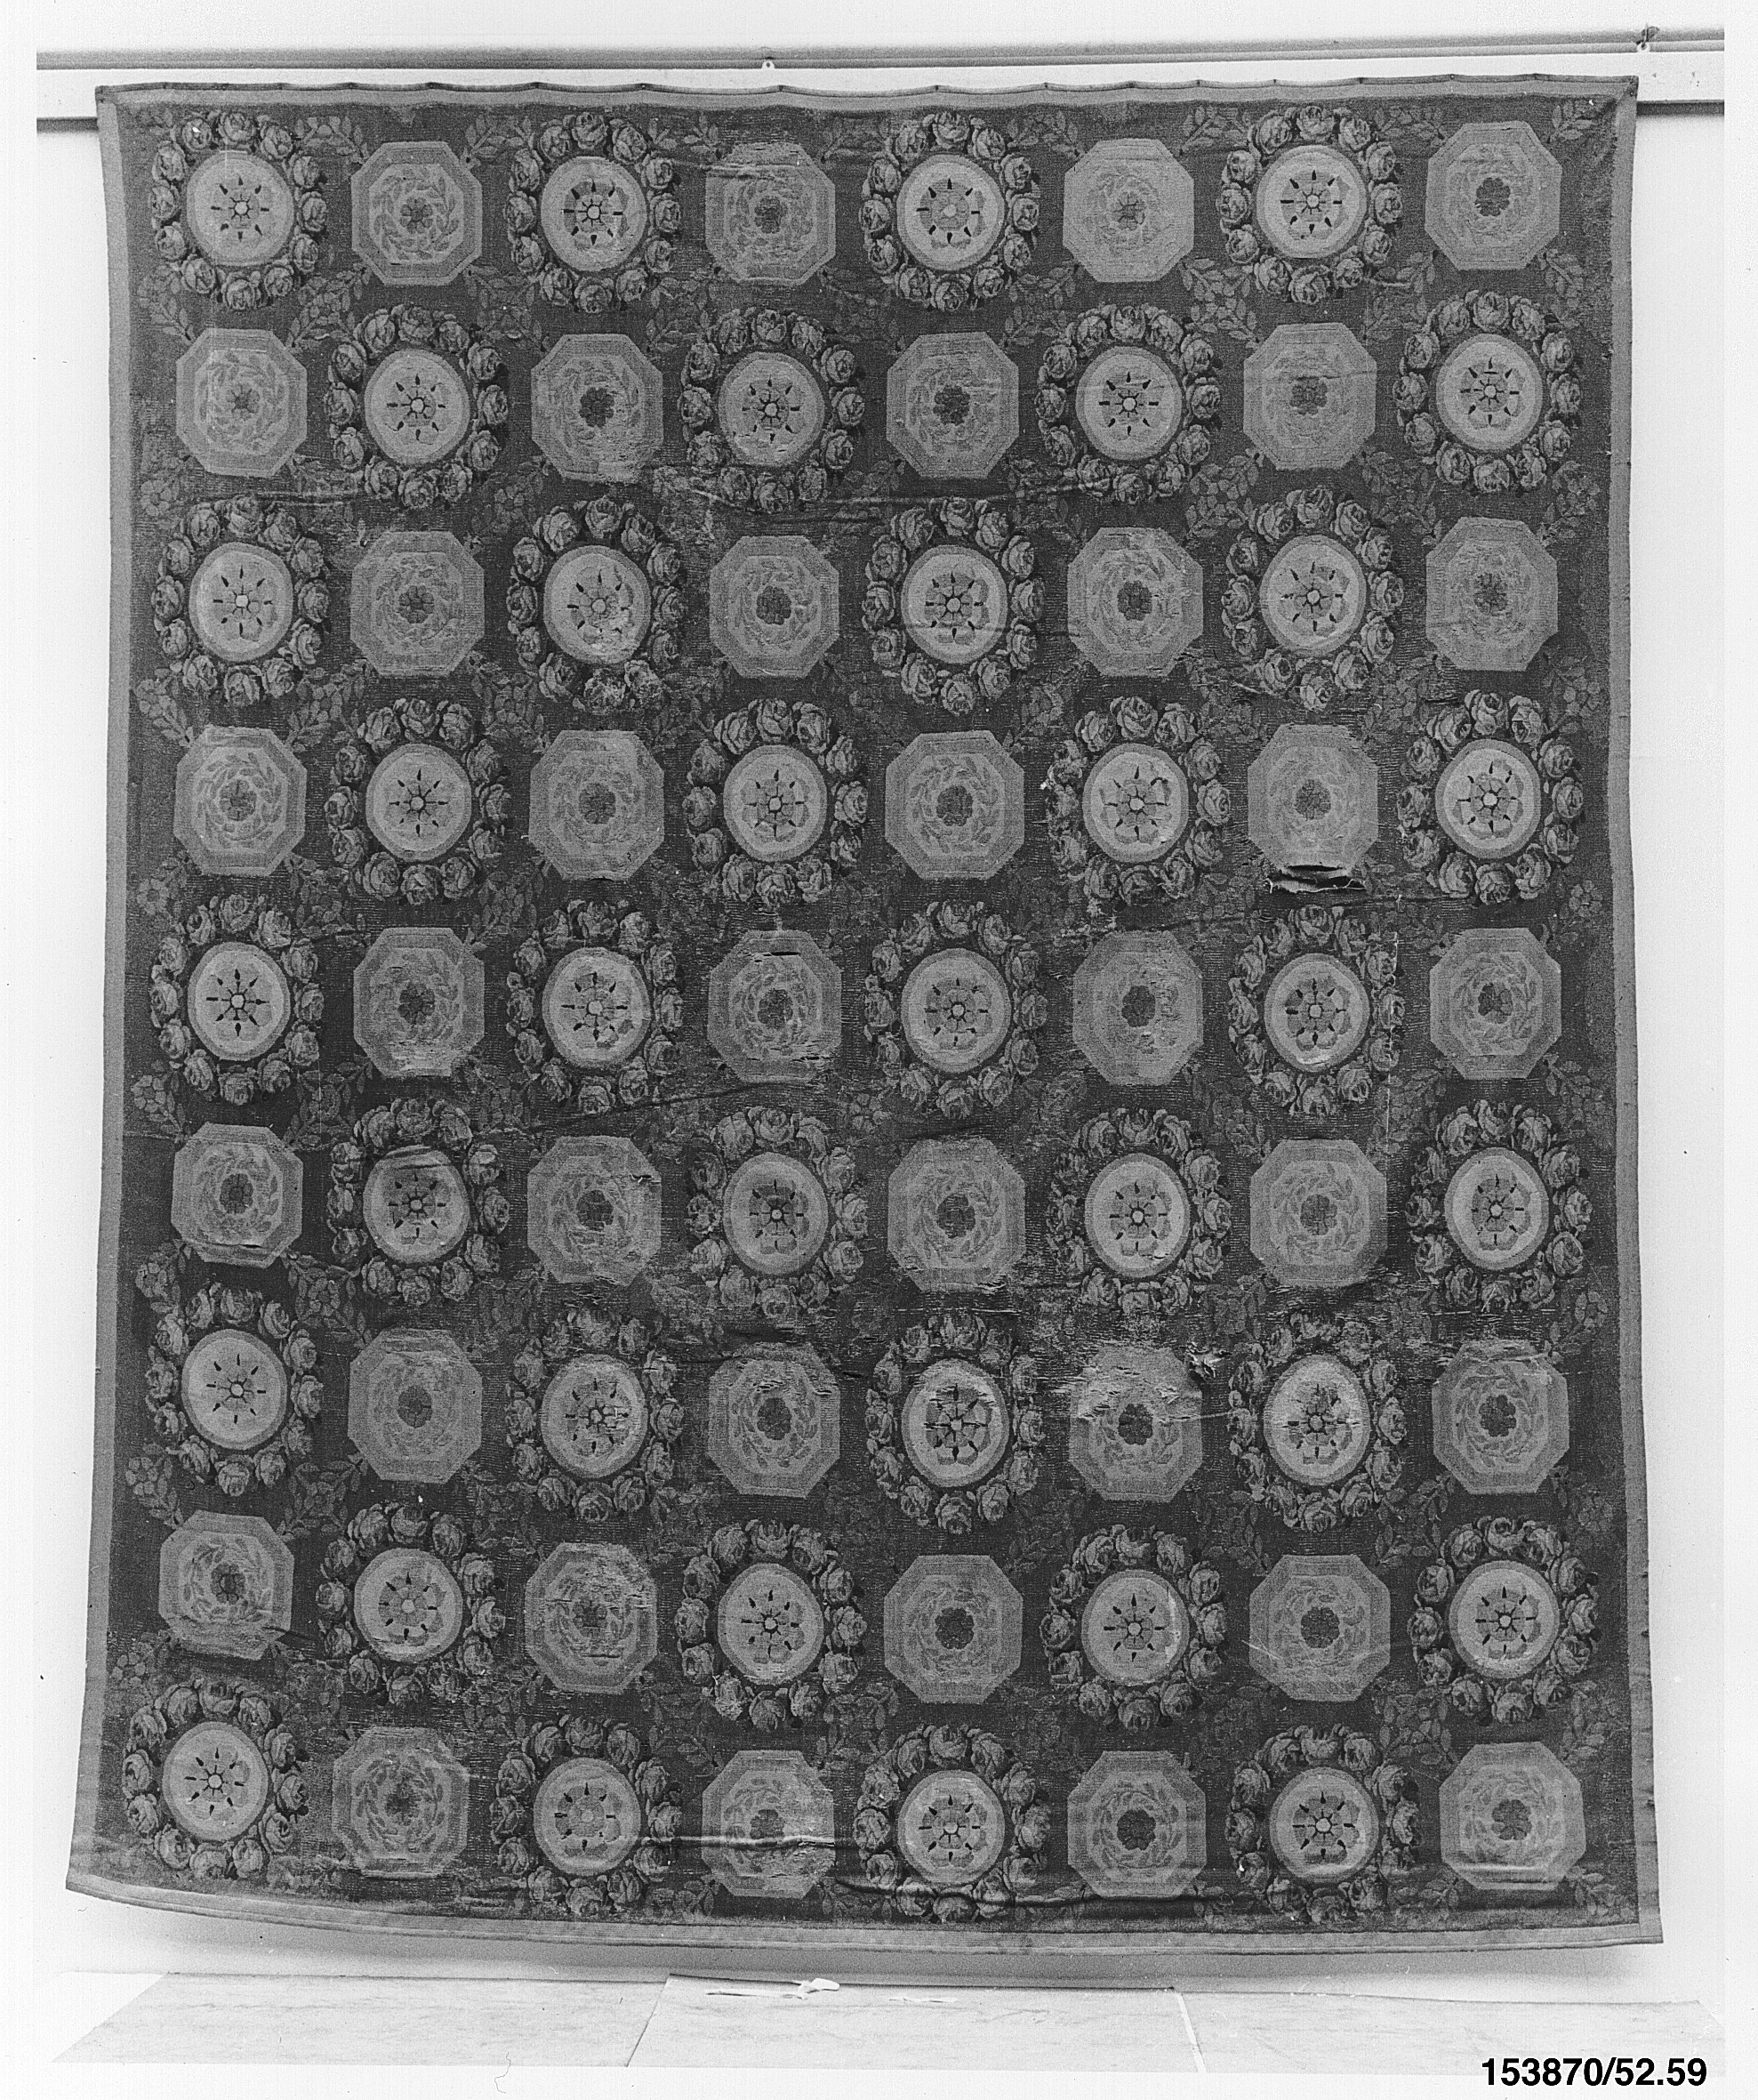 Woven carpet | French | The Metropolitan Museum of Art